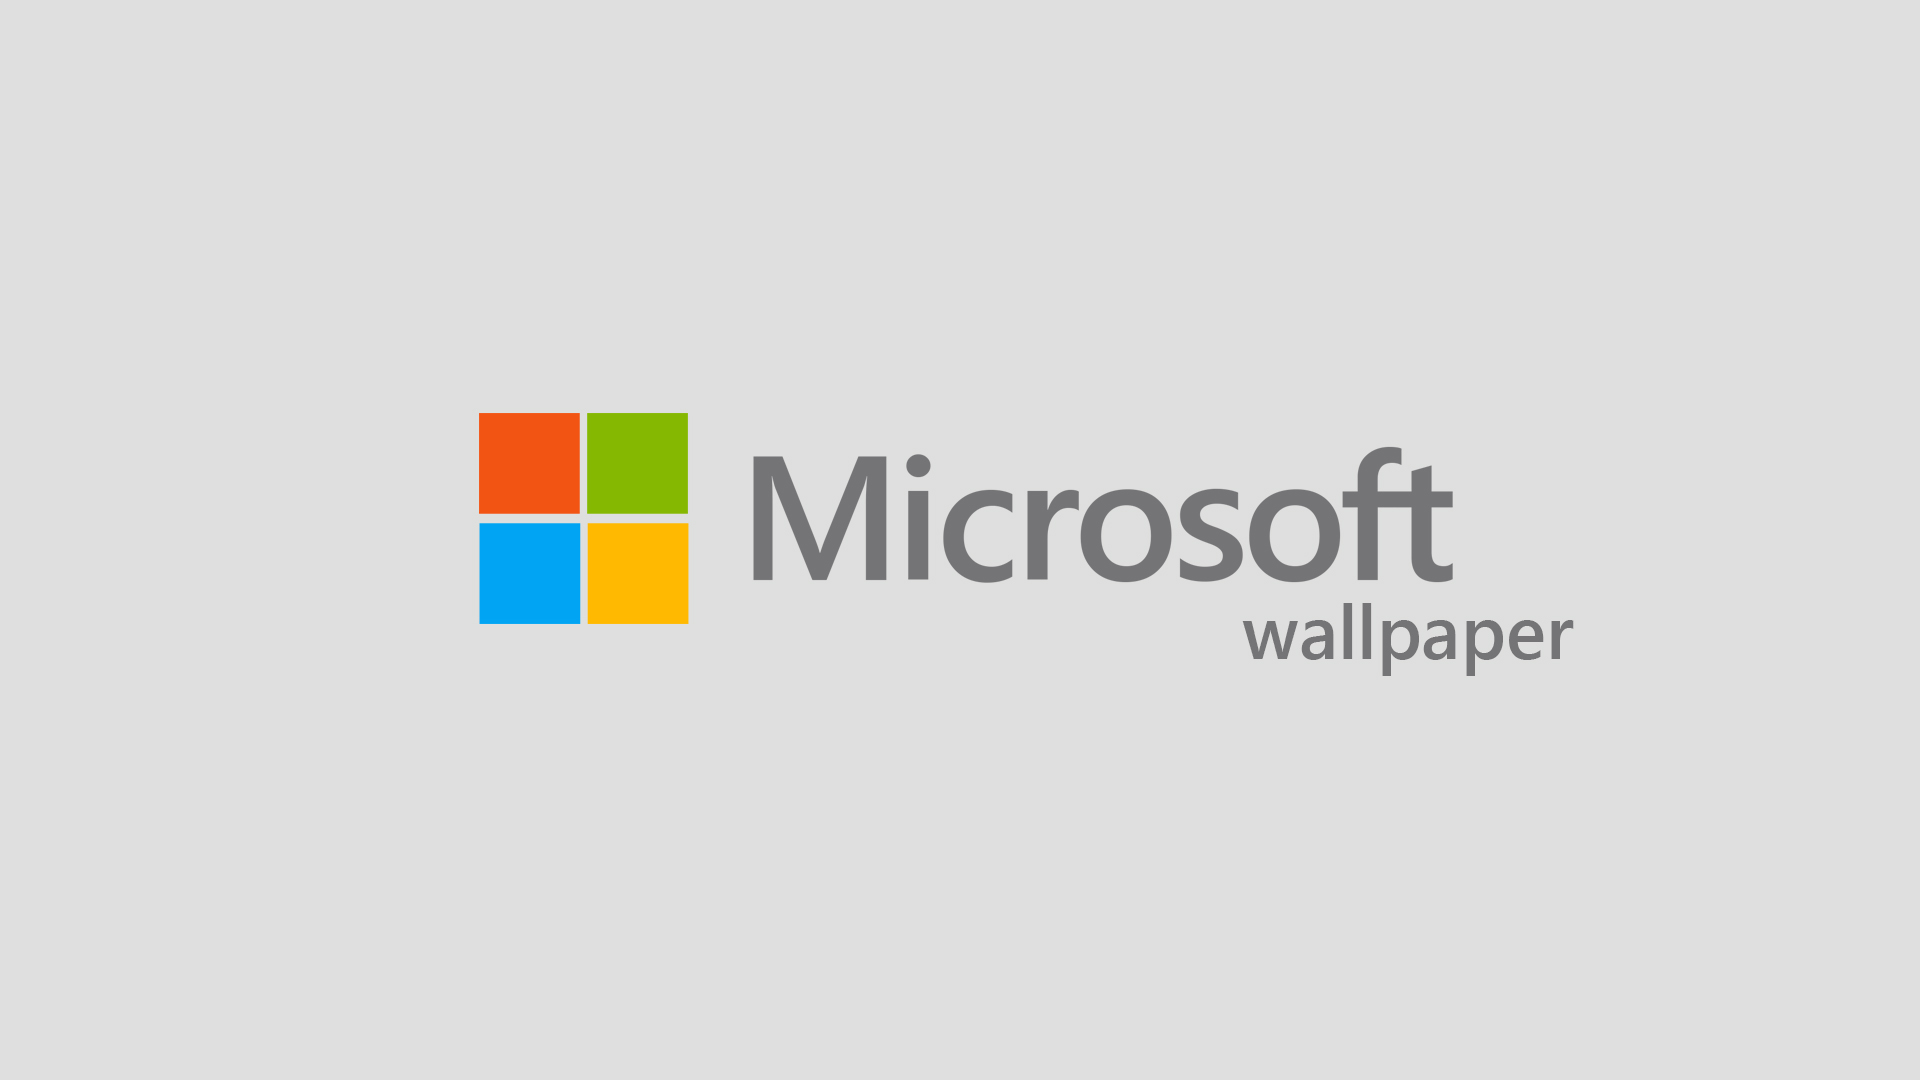 Microsoft wallpaper